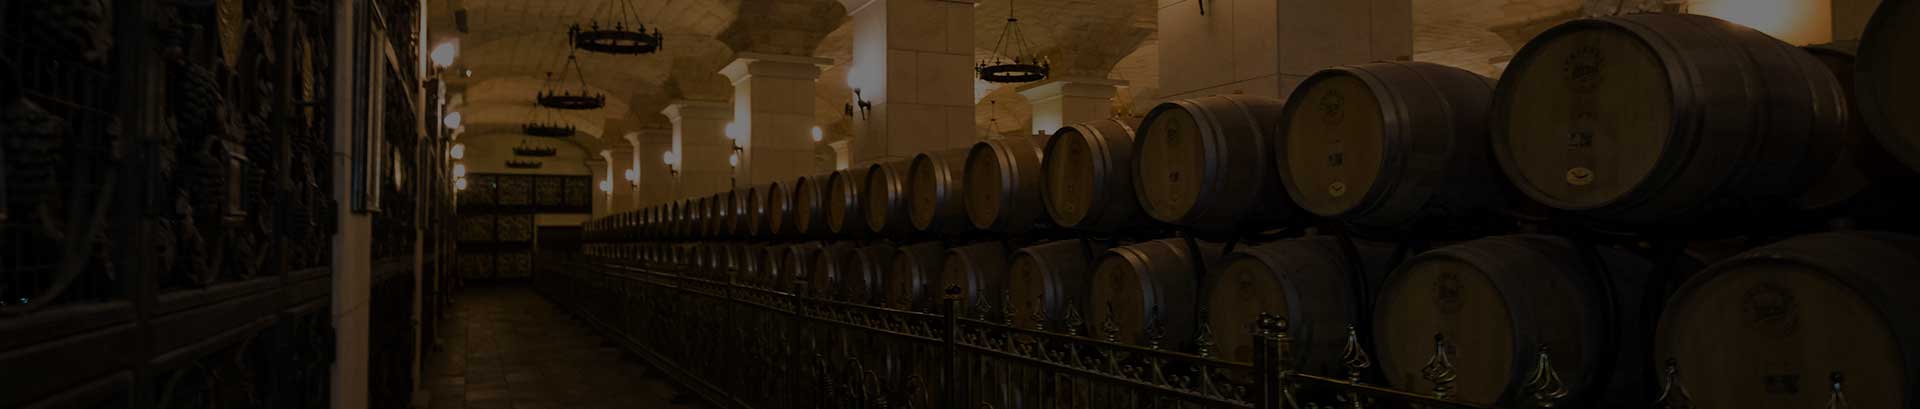 Wine Cellar Cooling Units Split System